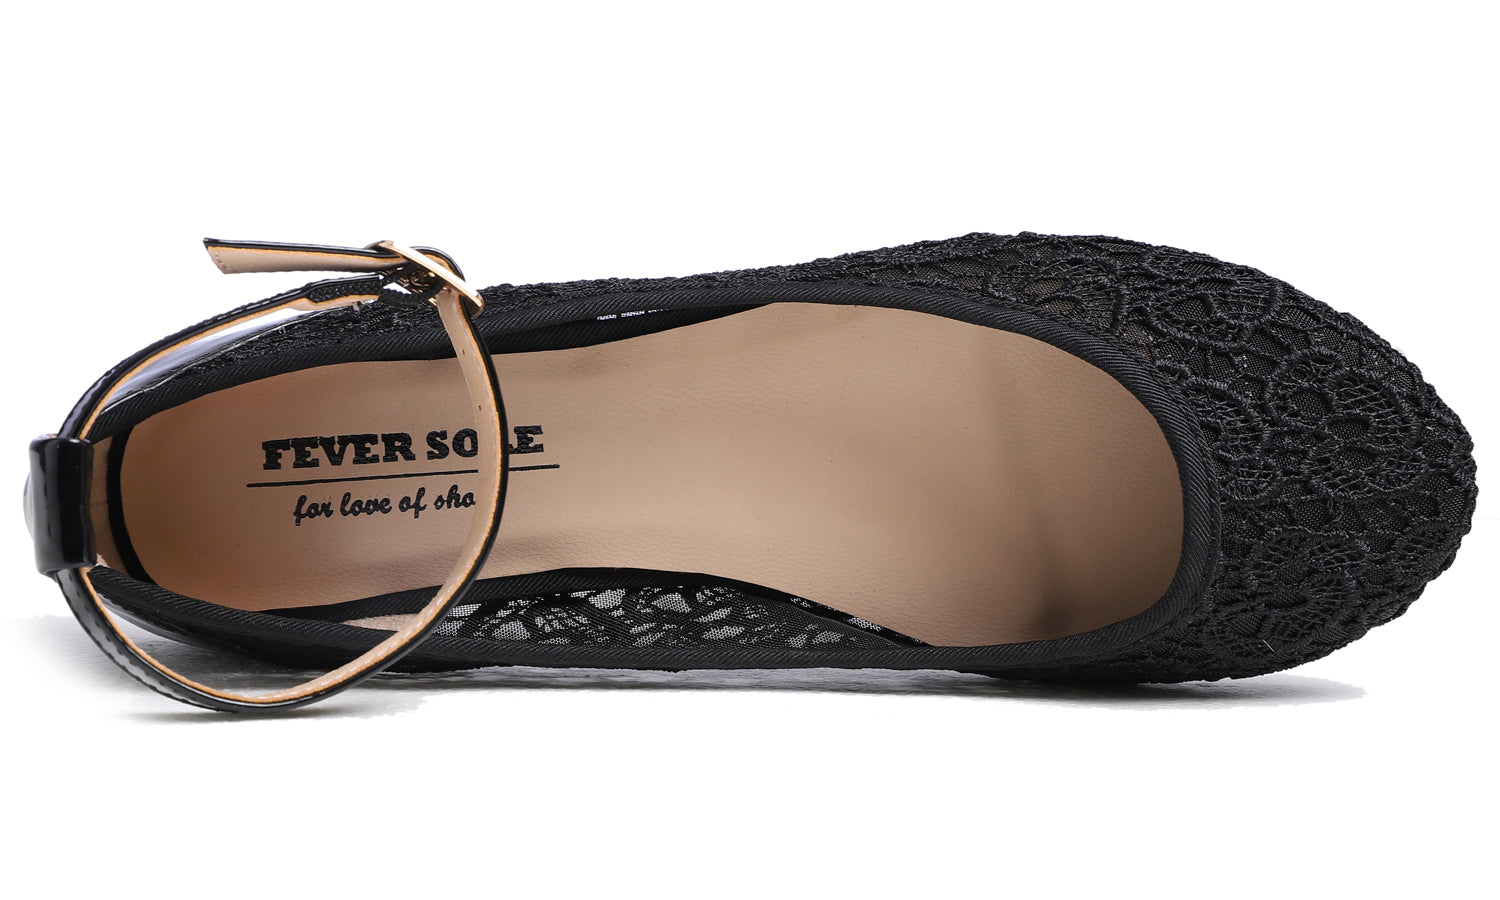 Feversole Women's Mary Jane Fashion Round Toe Easy Buckle Slip On Flats Black Lace Flat Heel Ankle Strap